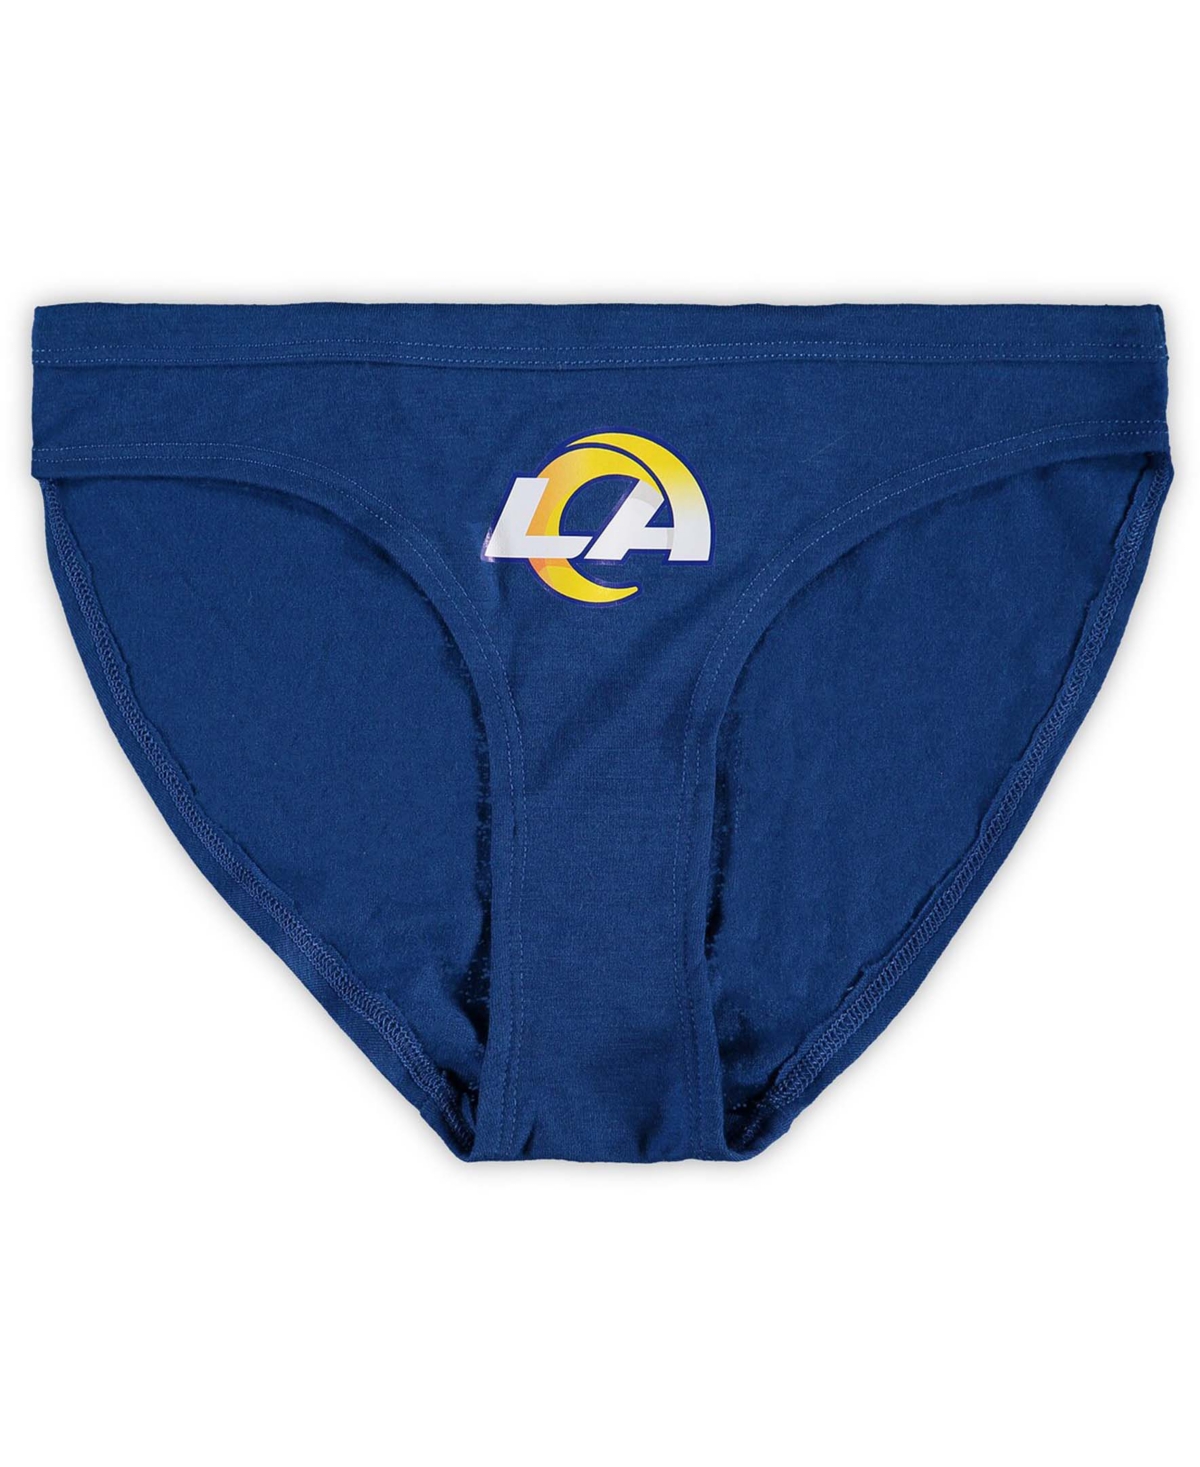 Women's Royal Los Angeles Rams Solid Panties - Royal Blue